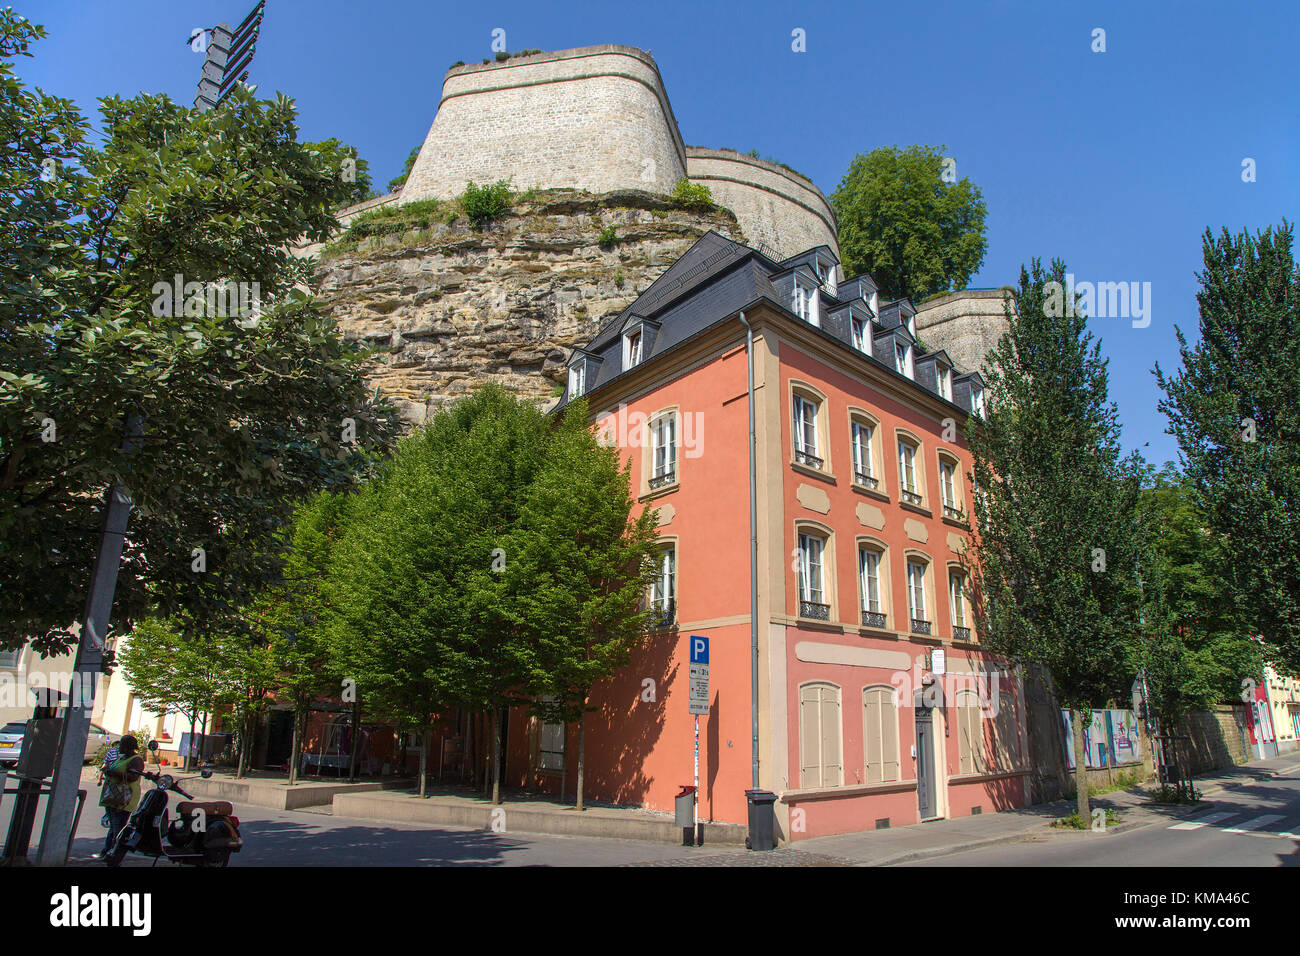 Heiliggeist-citadelle, la ville de Luxembourg, Luxembourg, Europe Banque D'Images